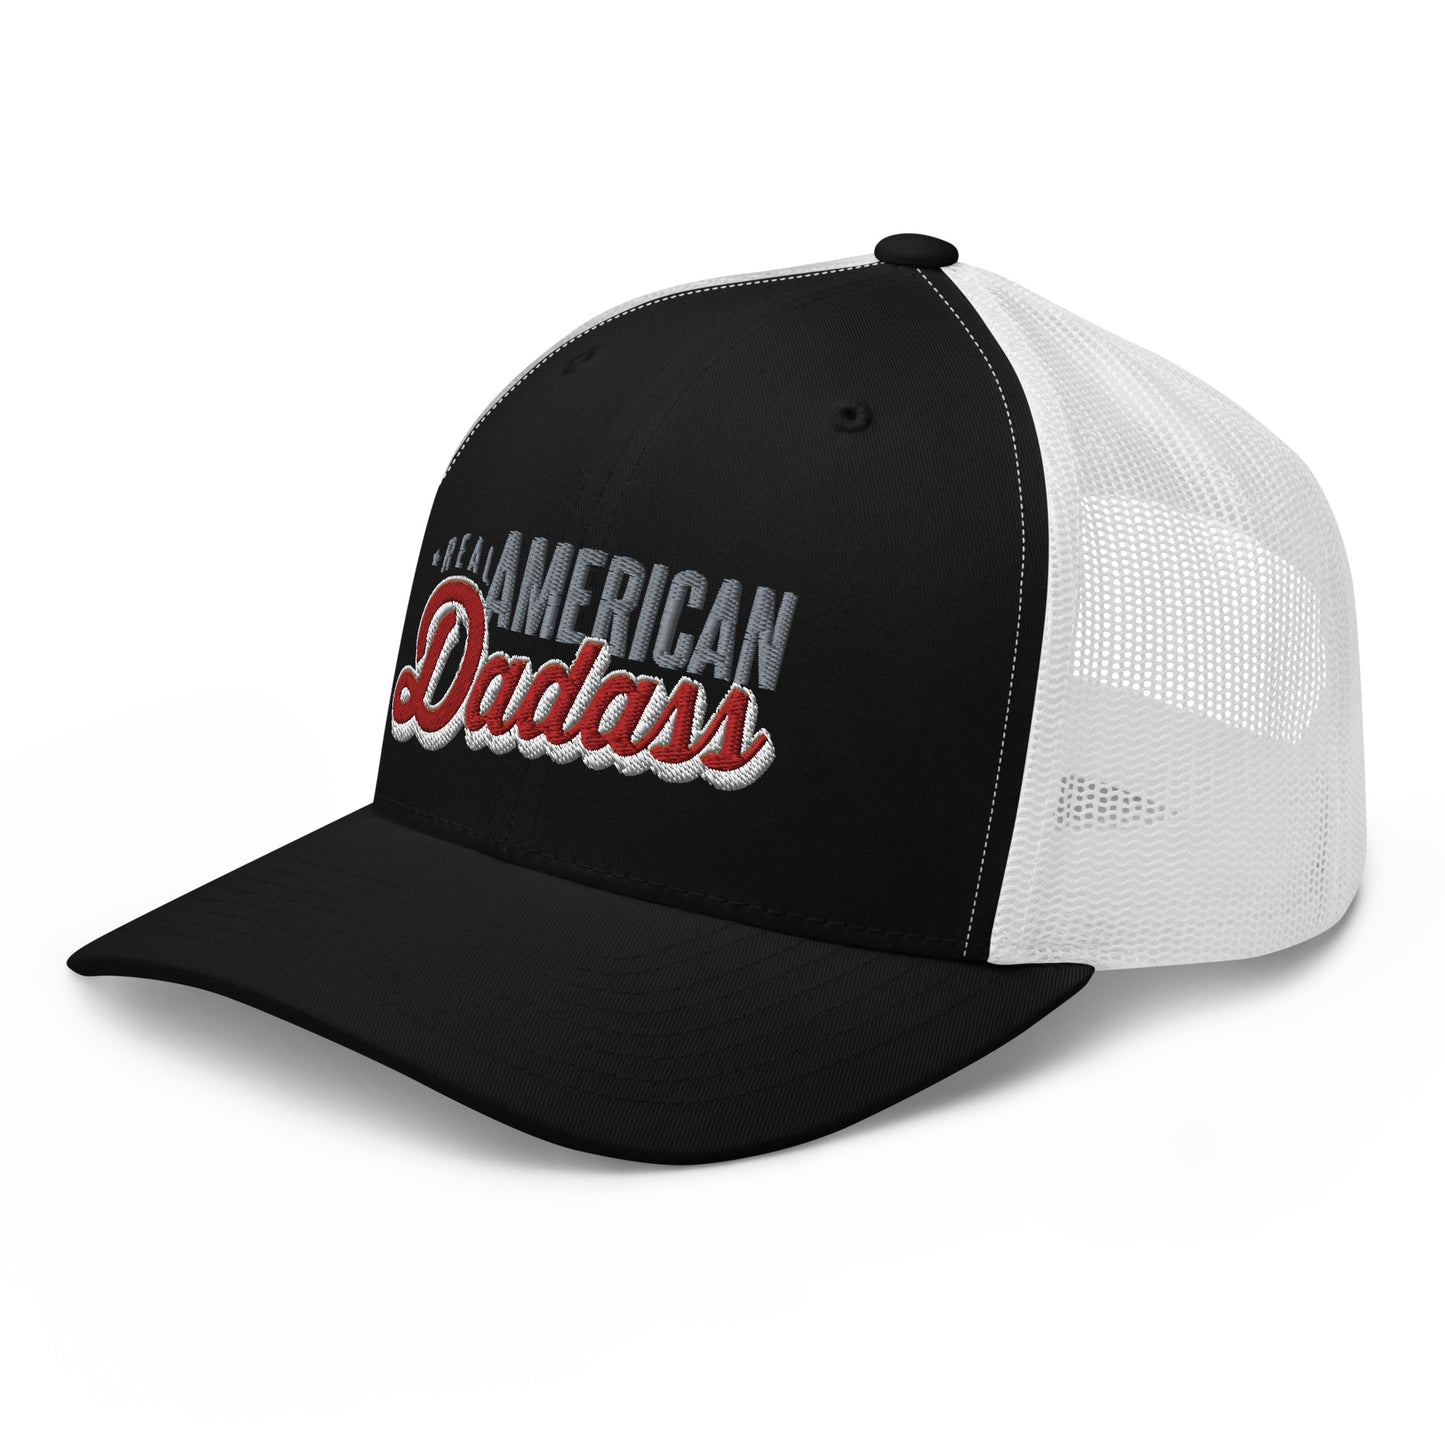 American Dadass - Trucker Cap